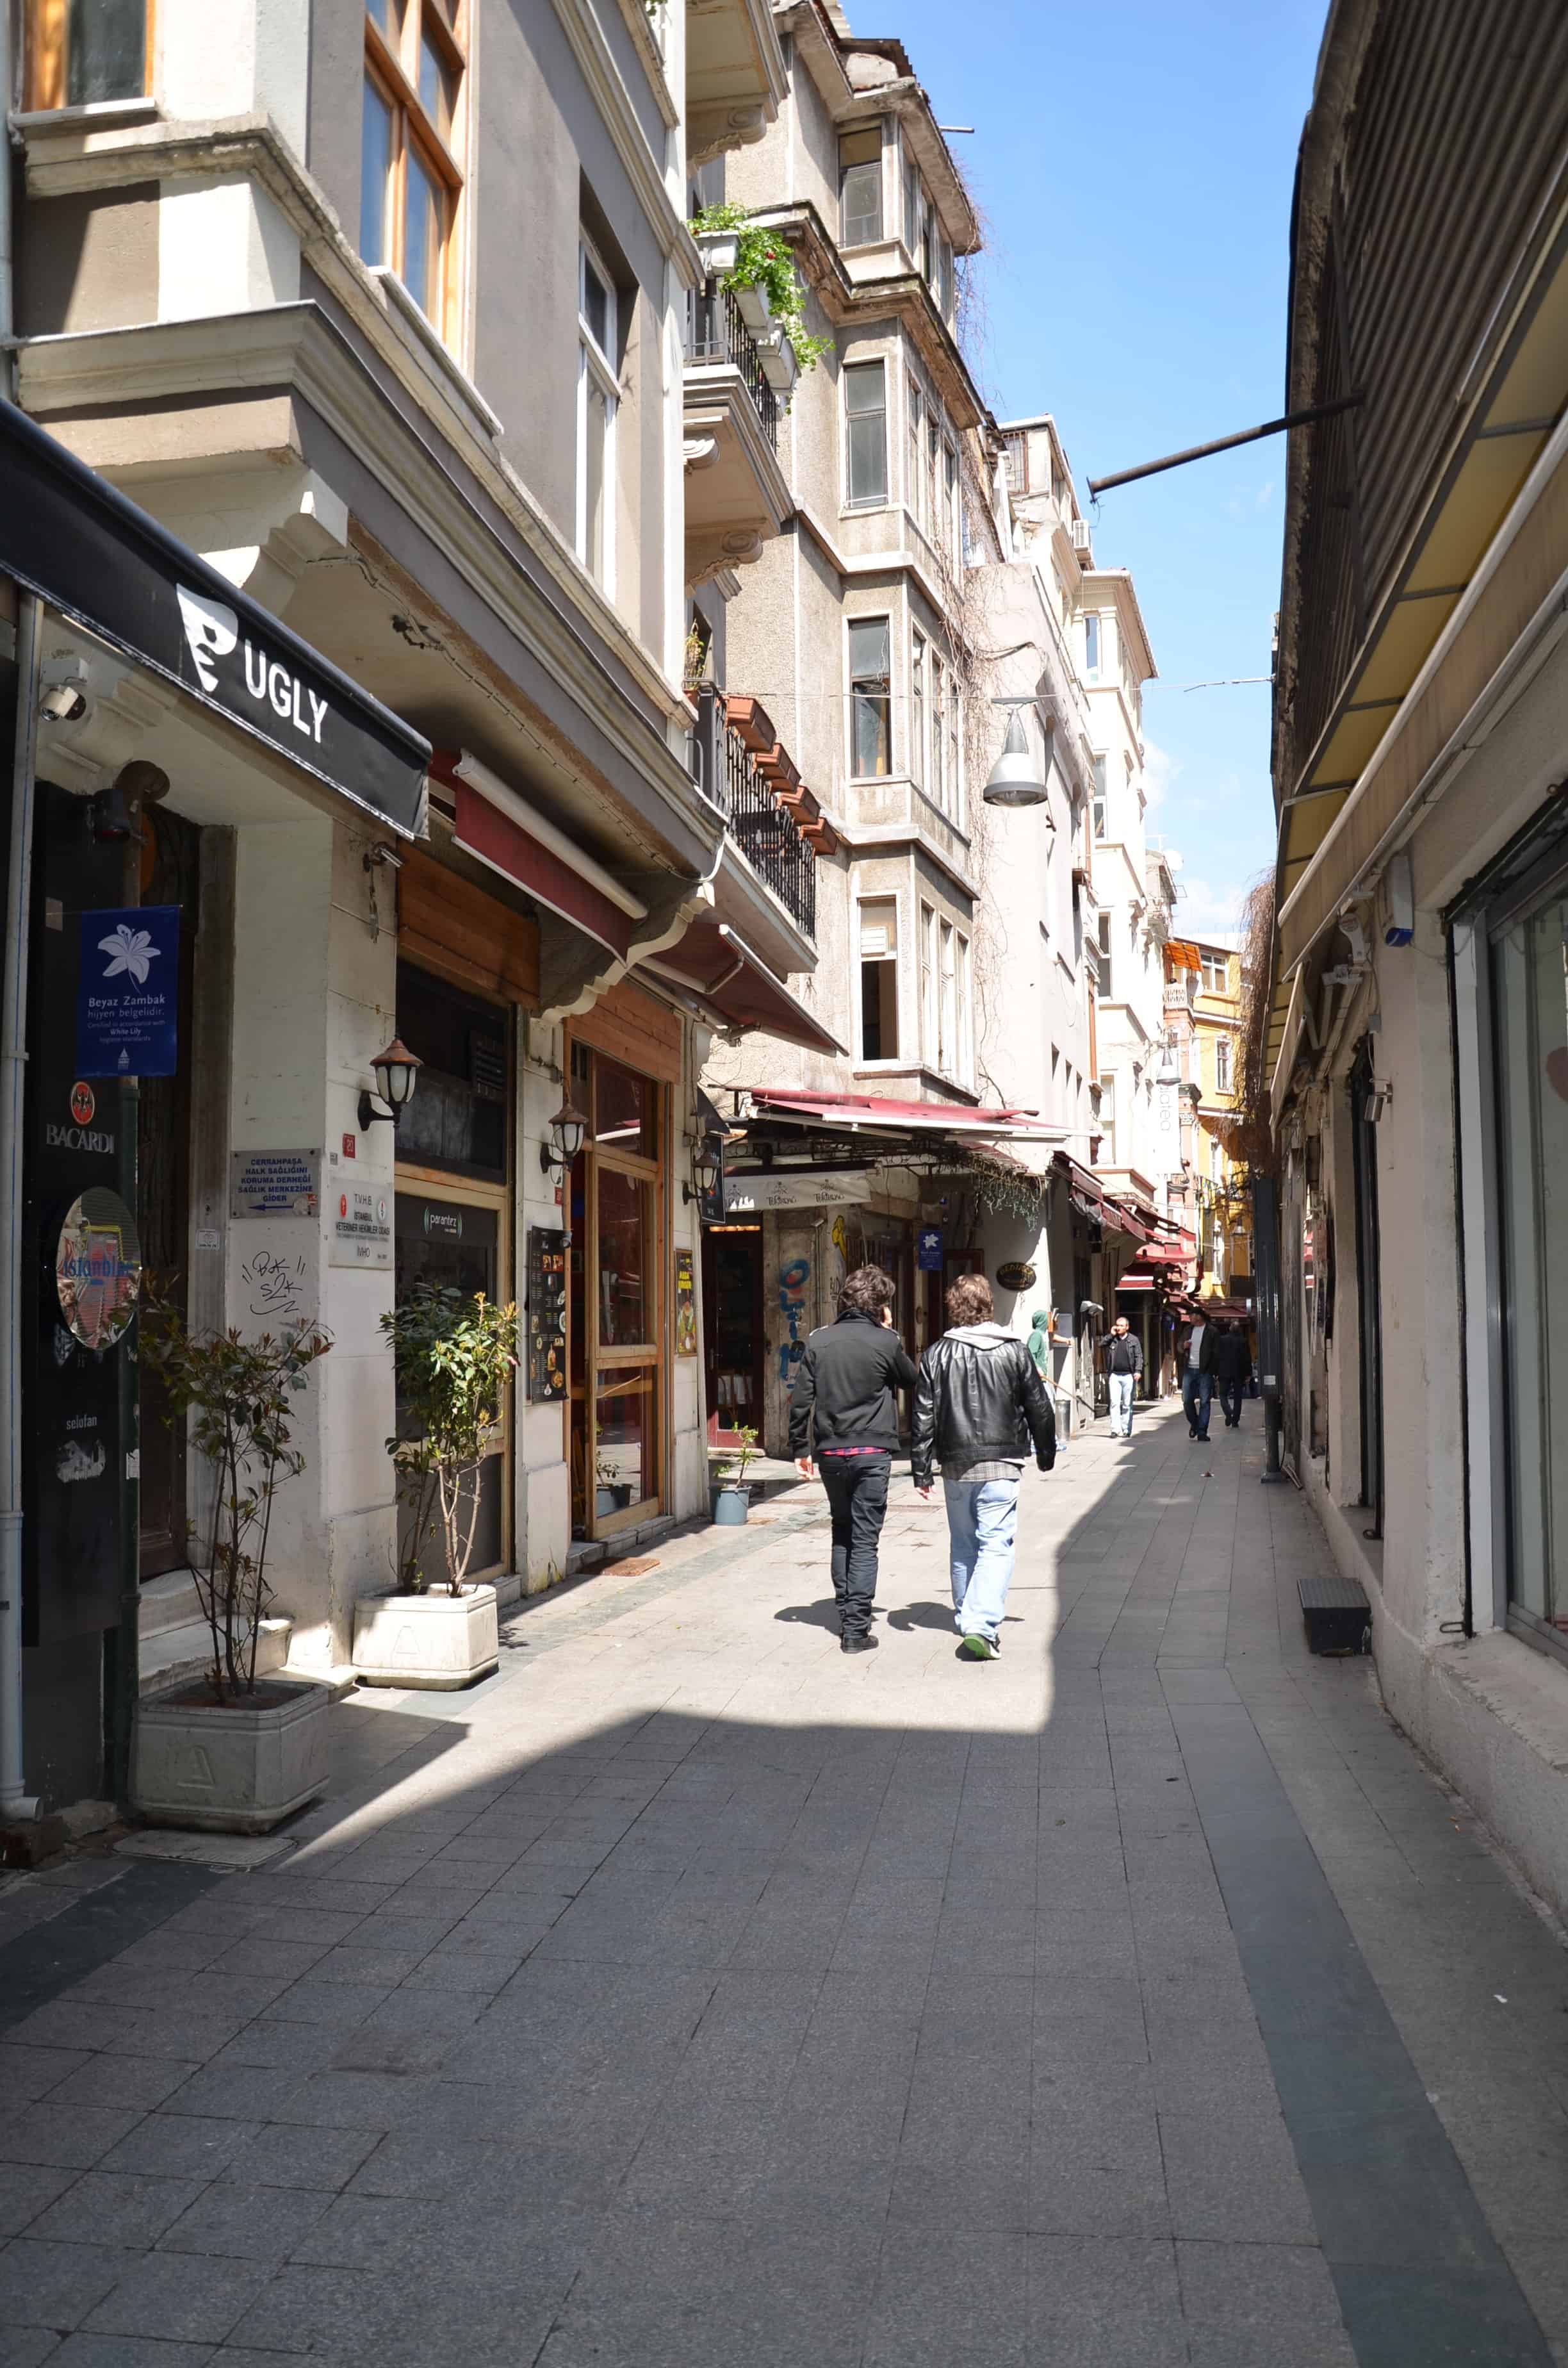 Sofyalı Street in Istanbul, Turkey